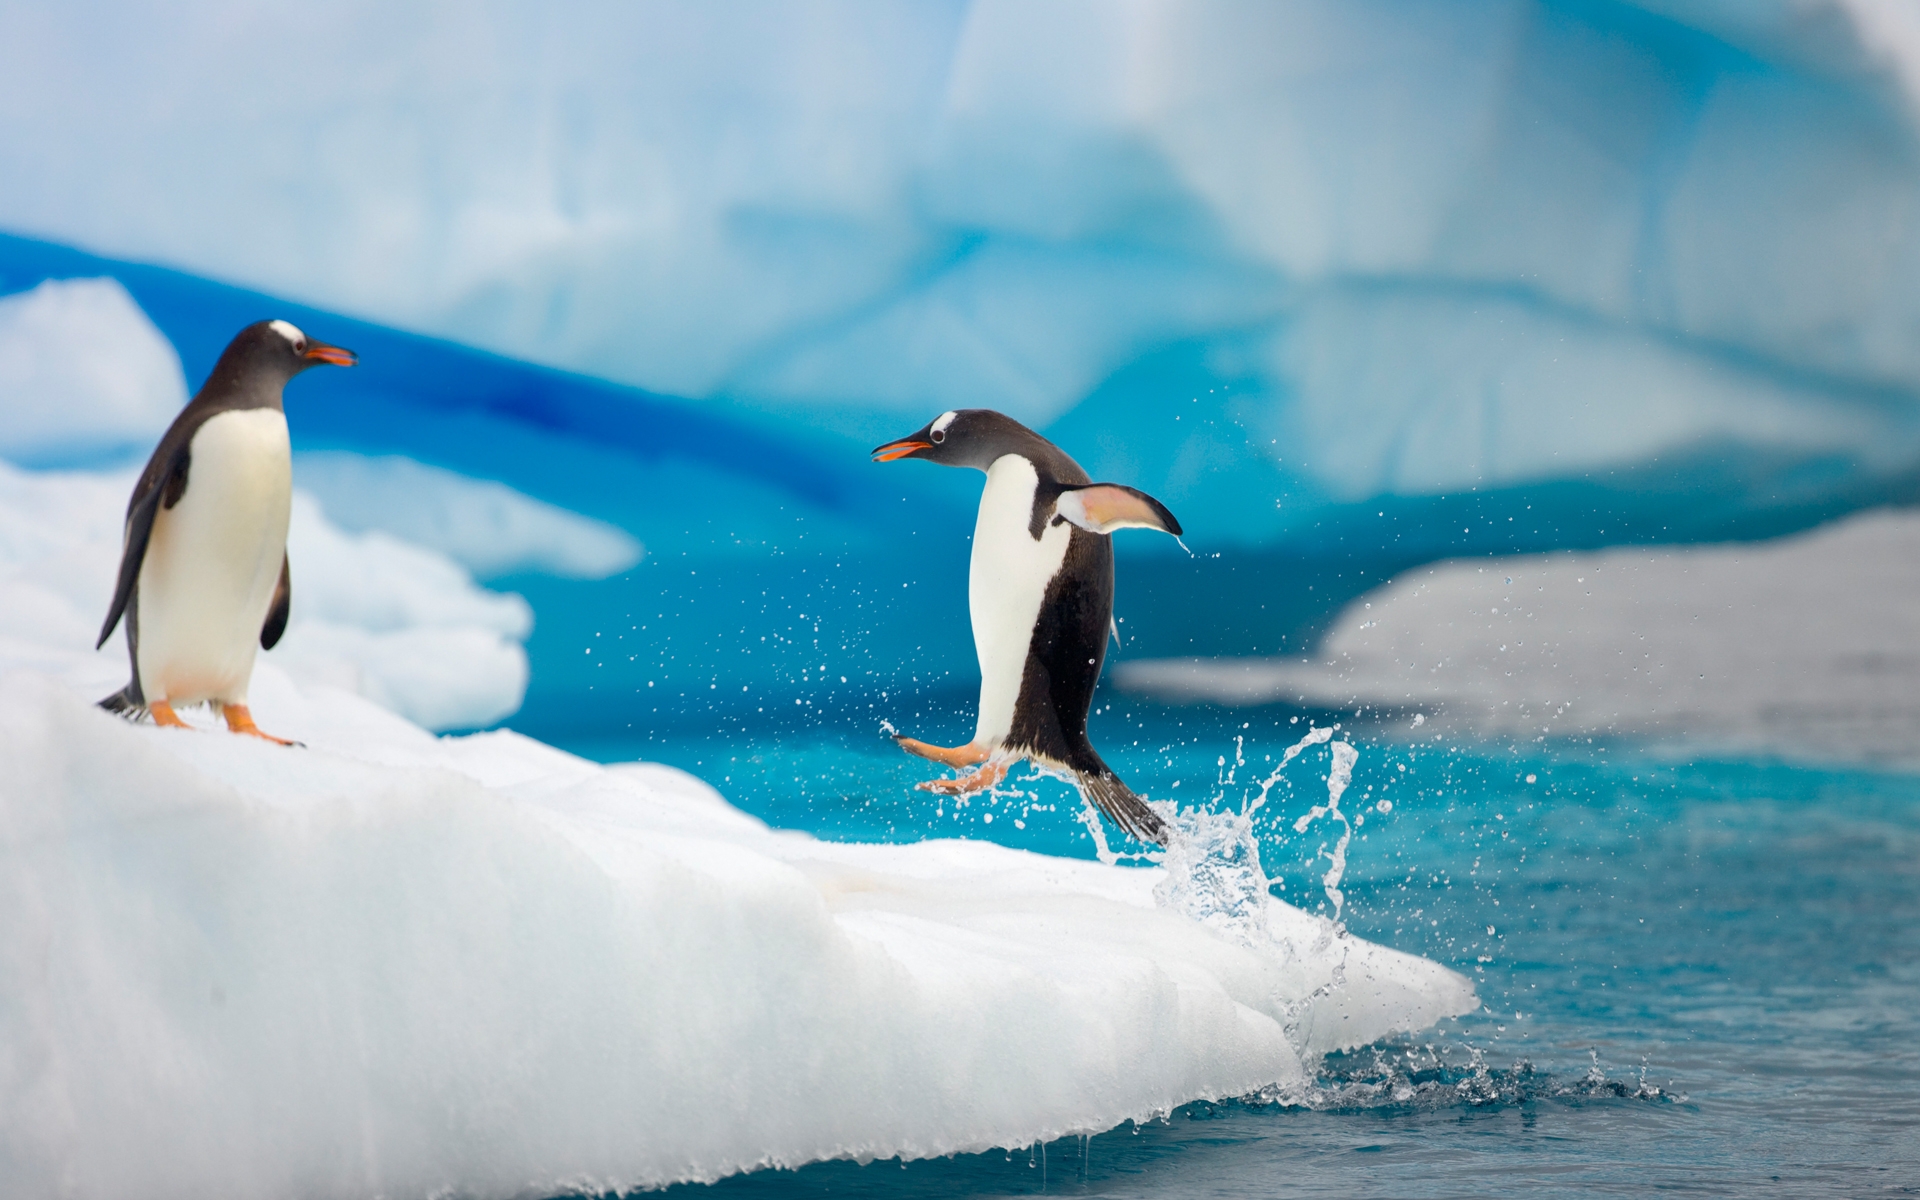 Descarga gratuita de fondo de pantalla para móvil de Animales, Pingüino.